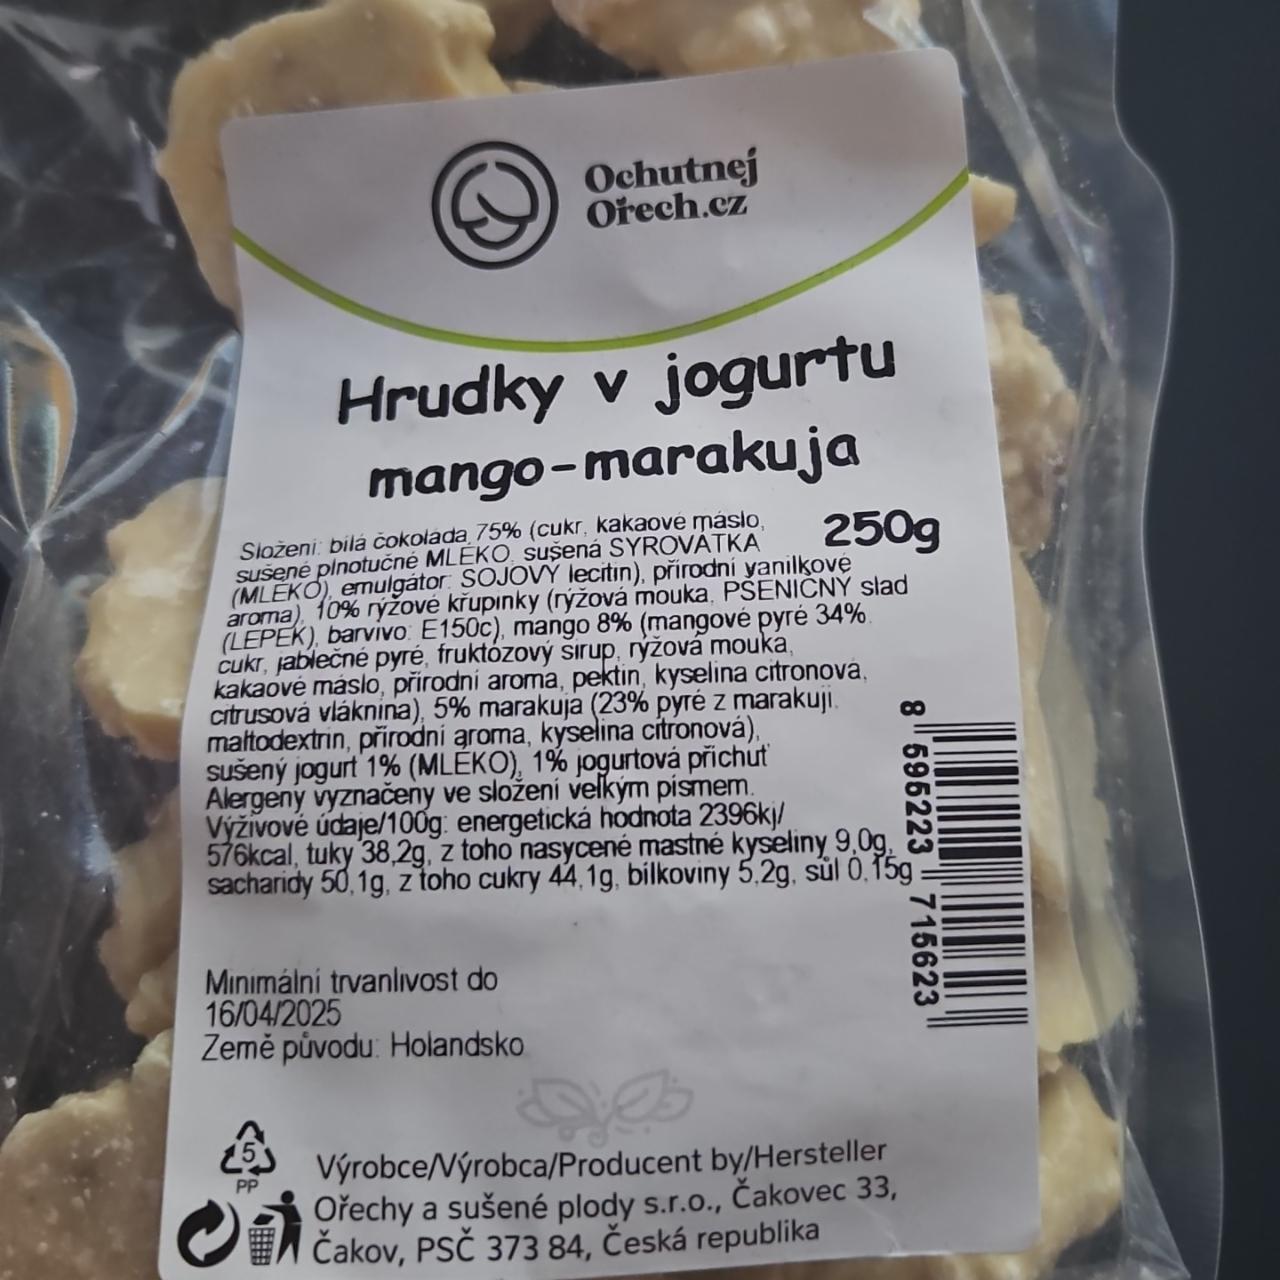 Fotografie - Hrudky v jogurtu mango marakuja Ochutnejorech.cz